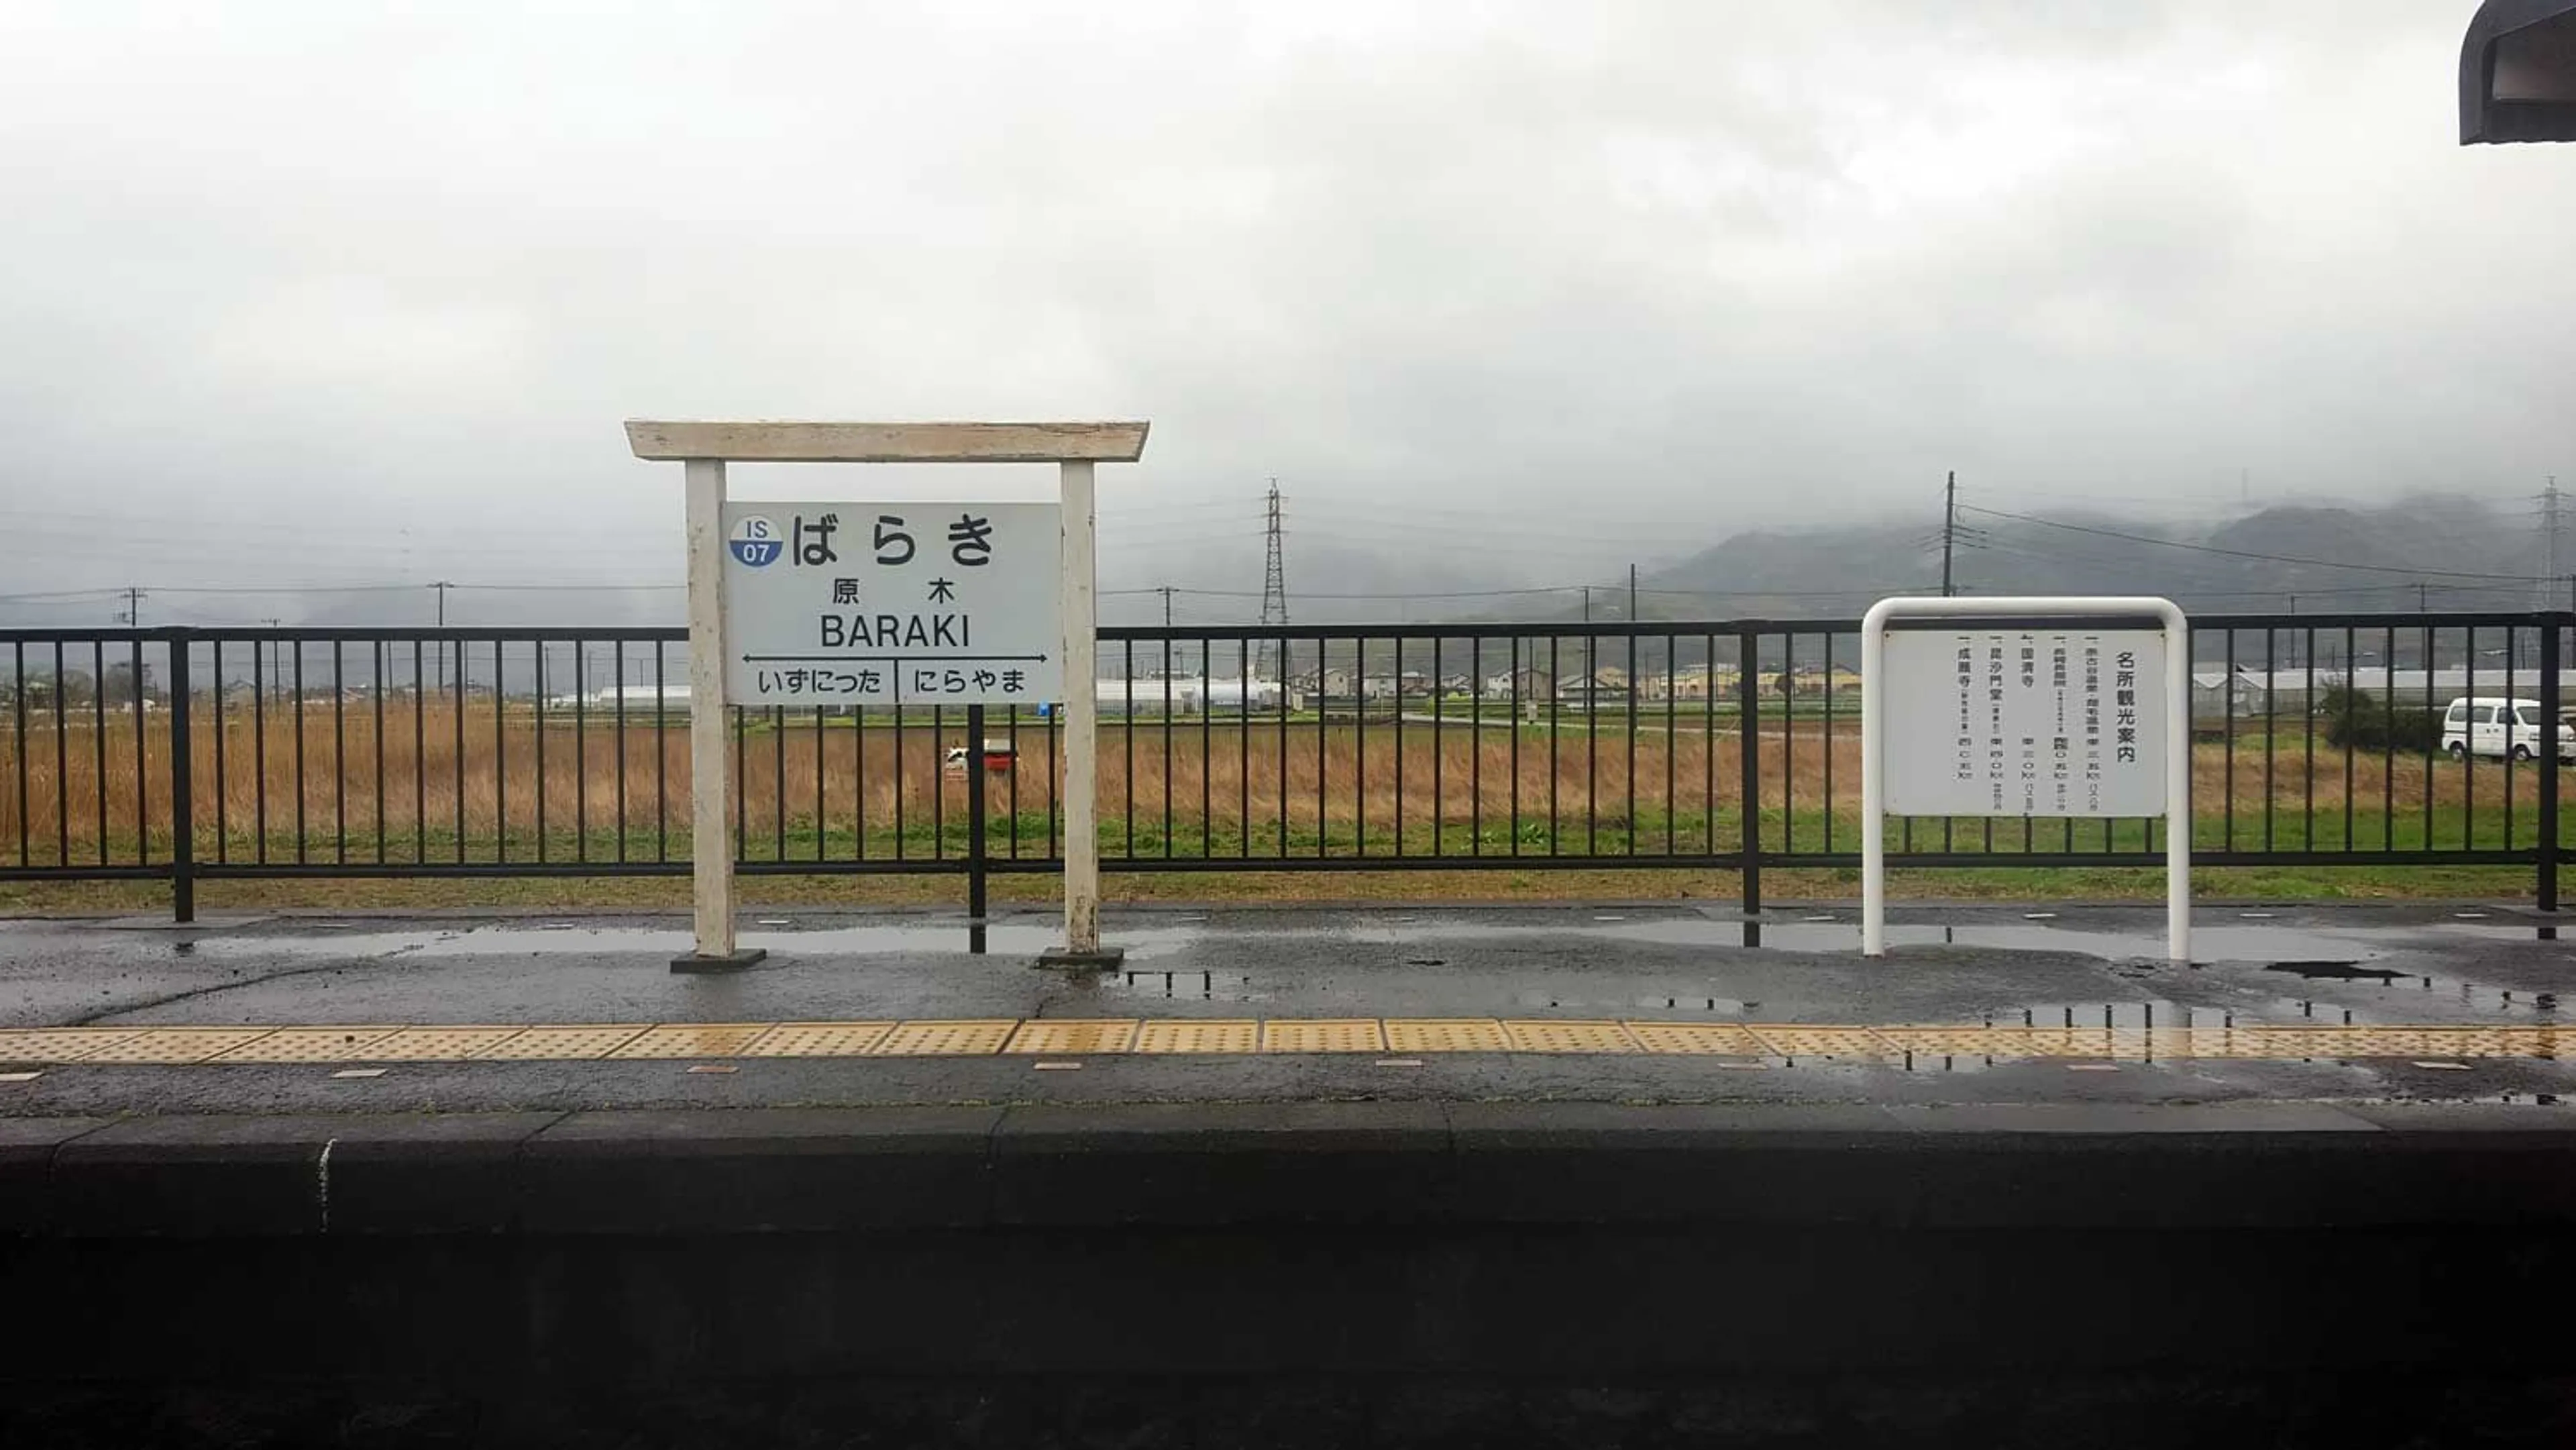 Rainy day at the Baraki train station in central Japan